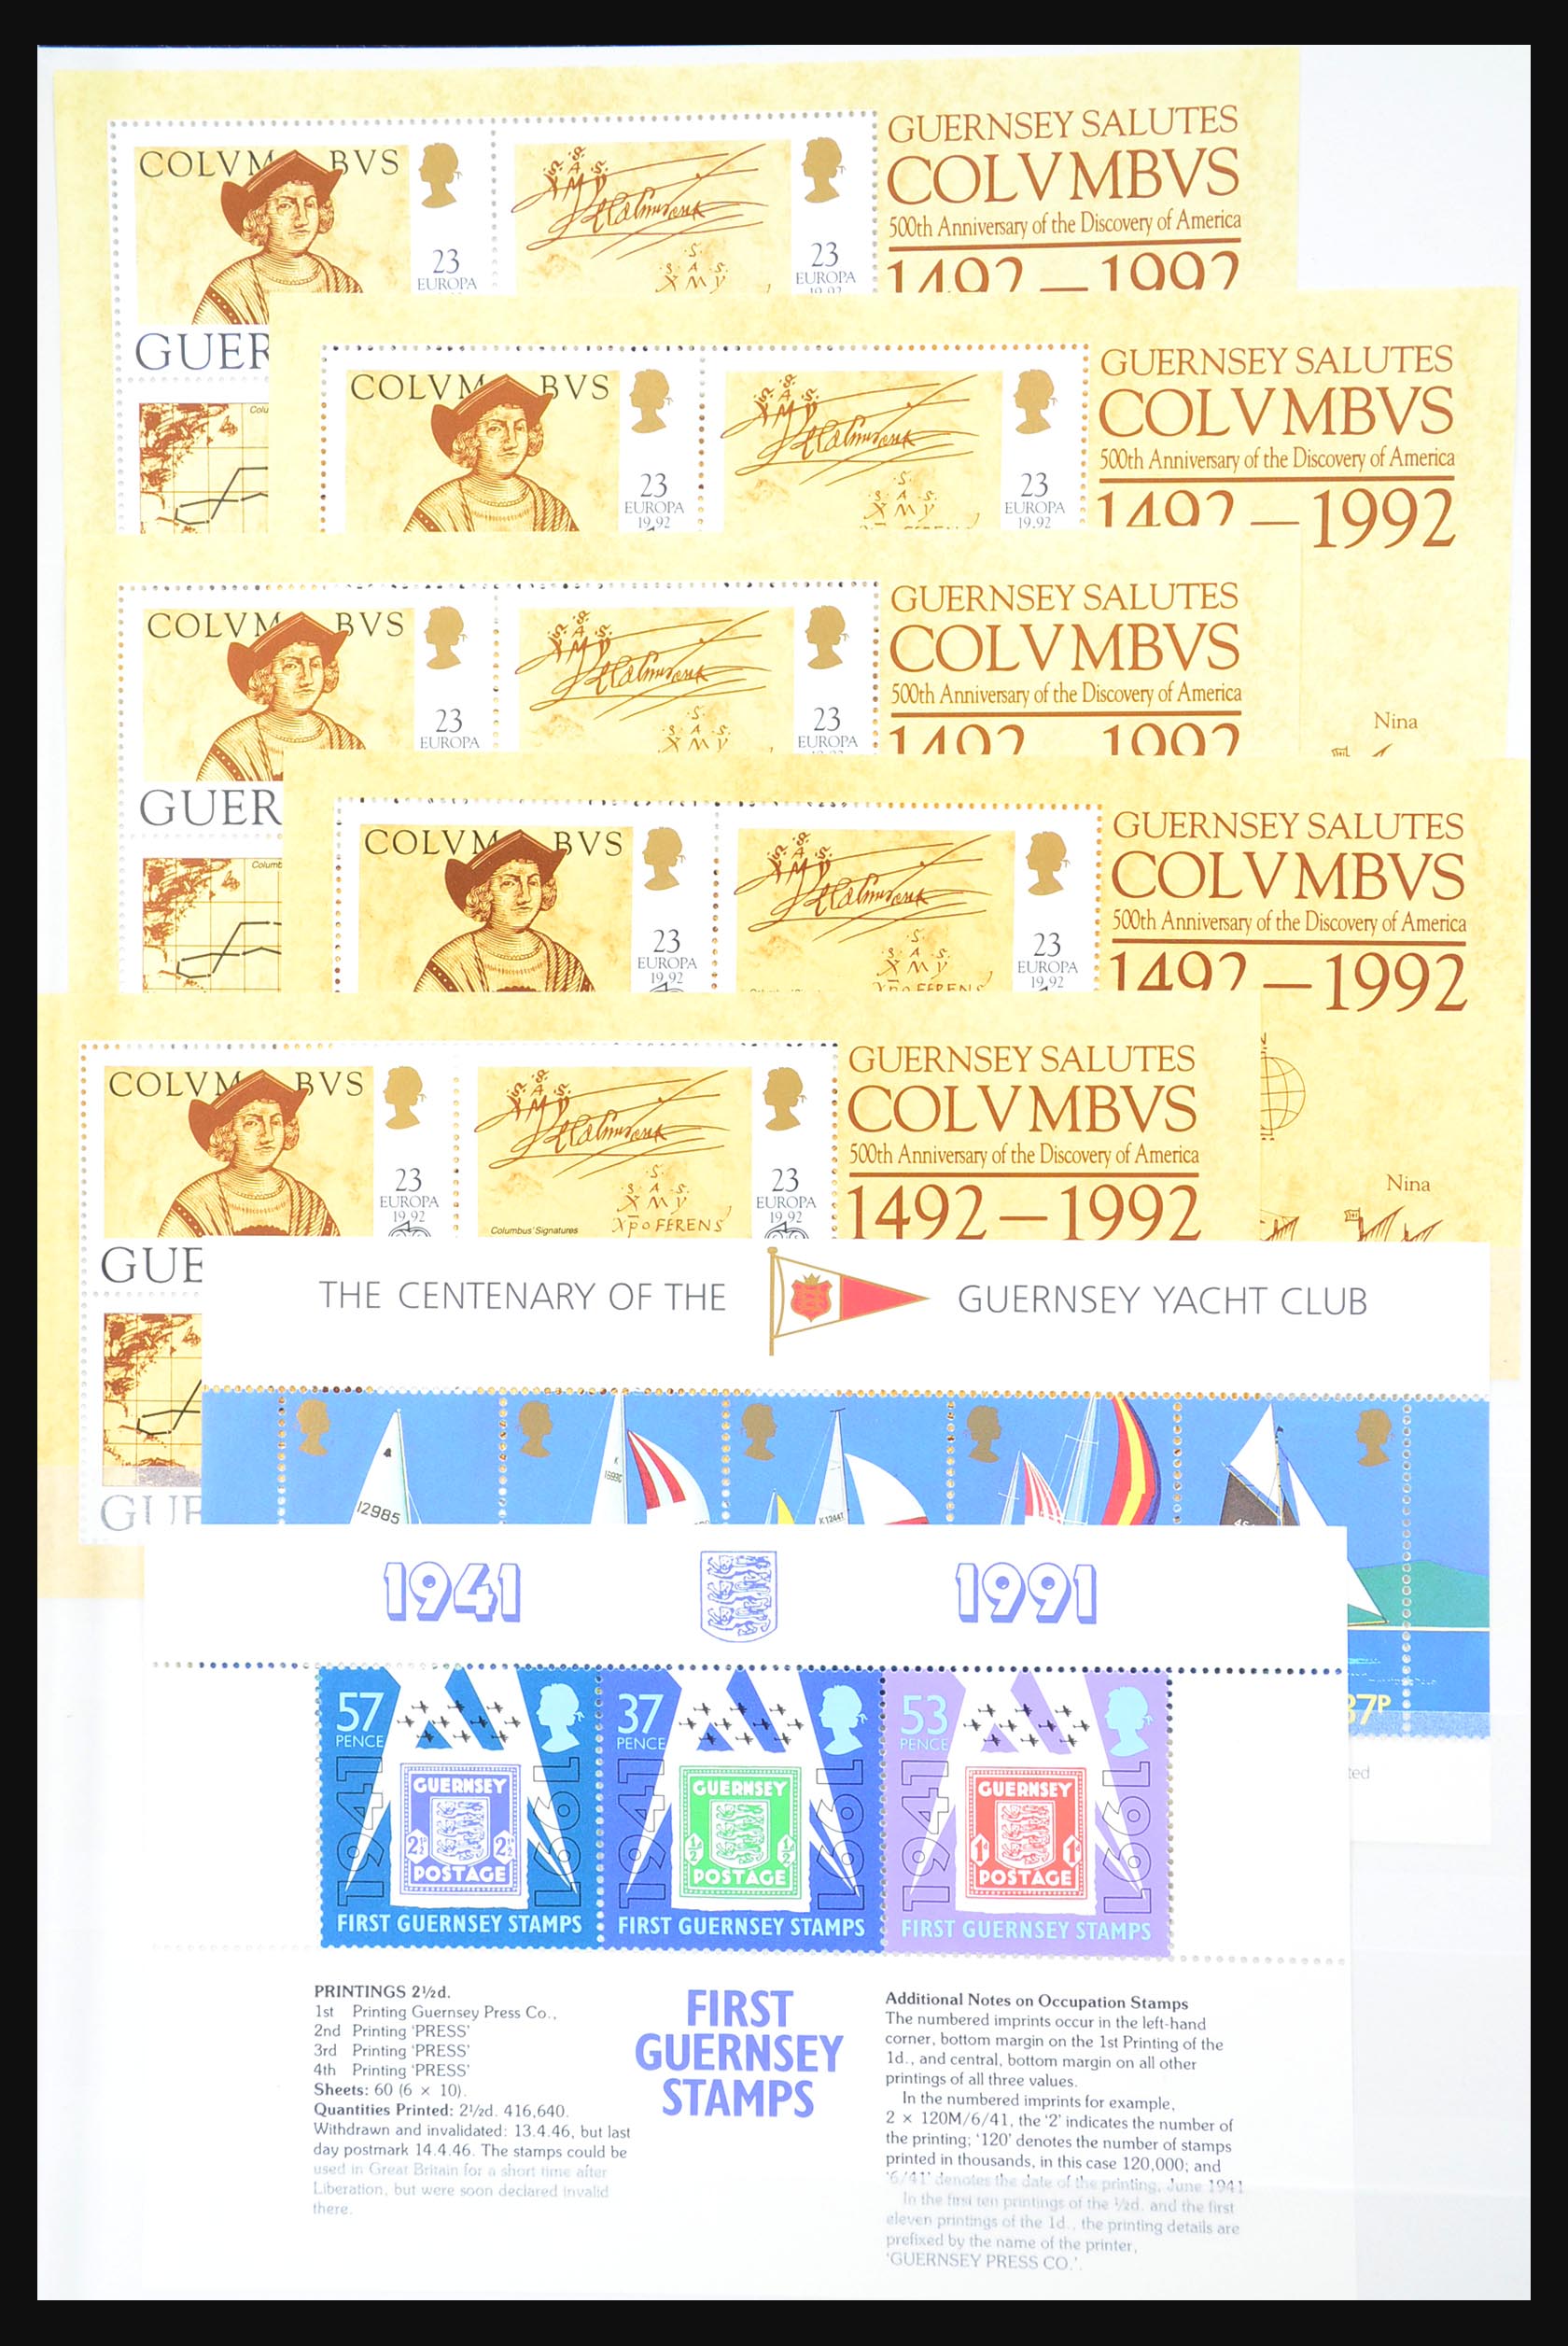 31249 061 - 31249 Channel Islands souvenir sheets and sheetlets 1978-1997.